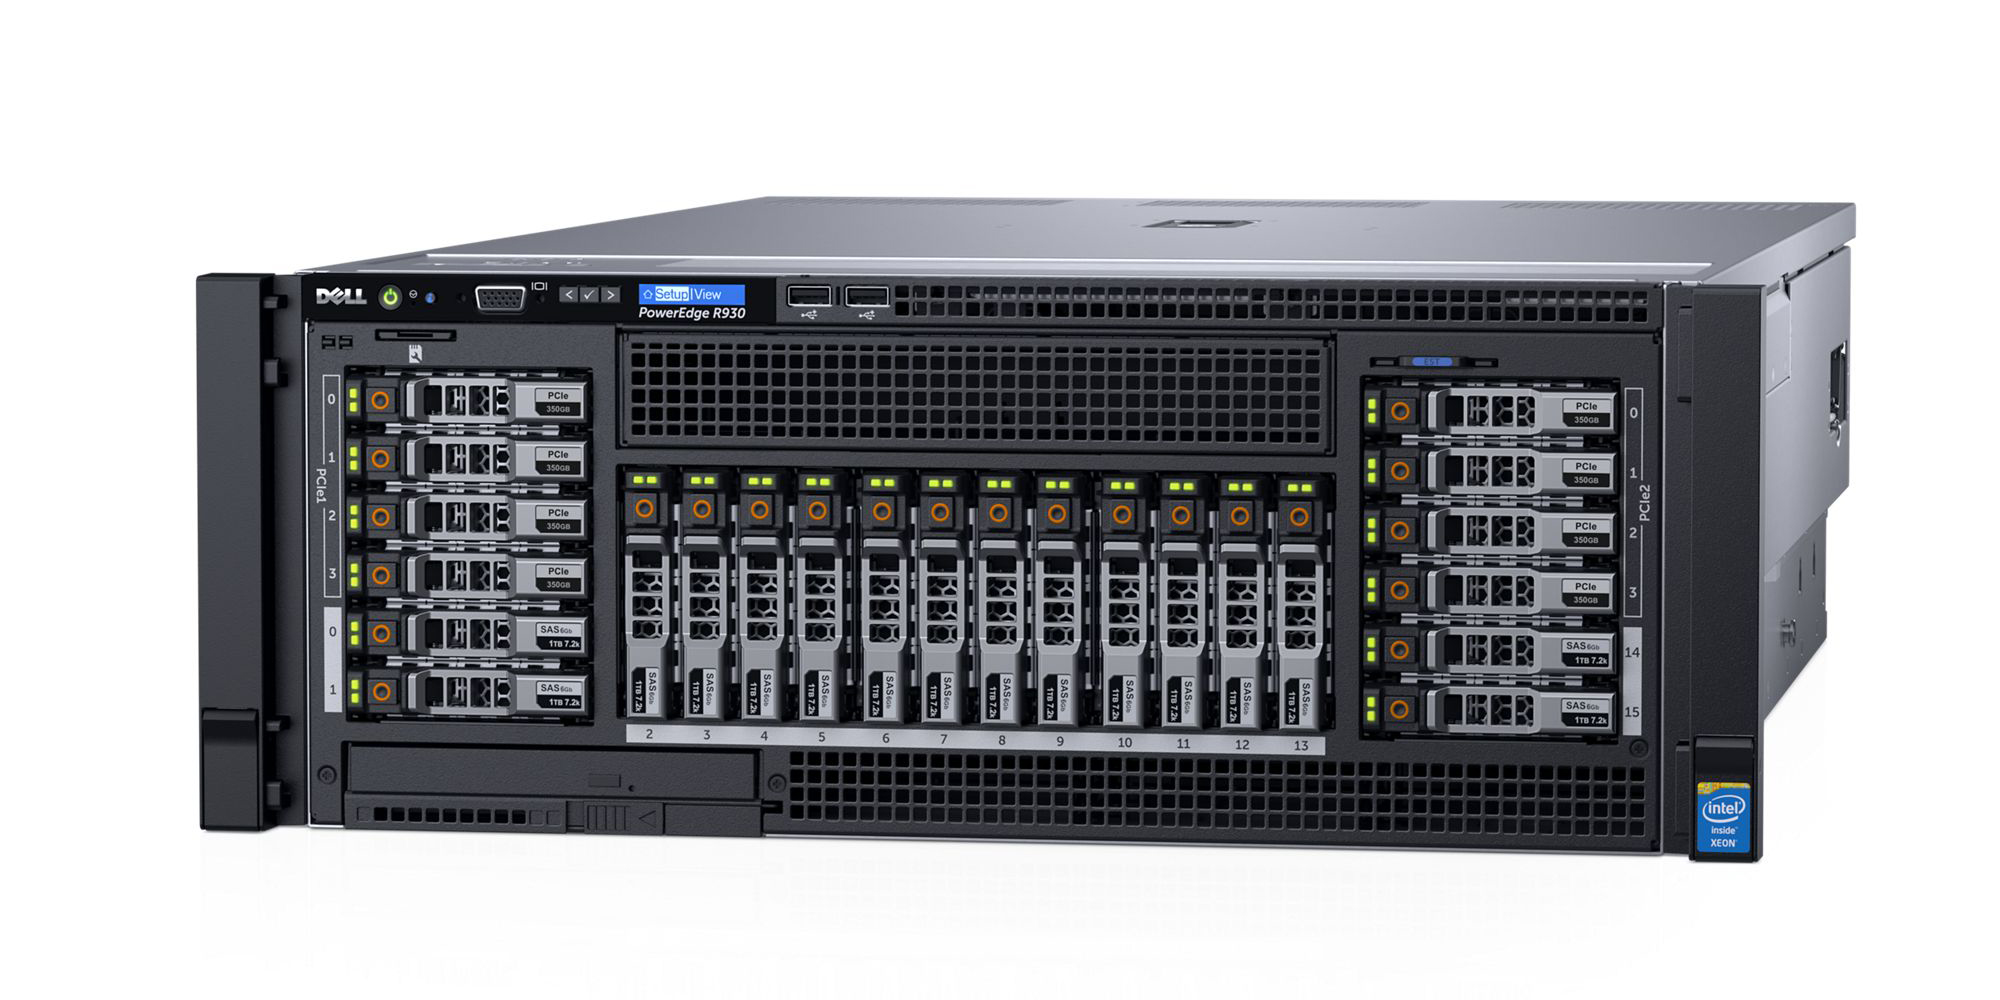 PowerEdge R930 server